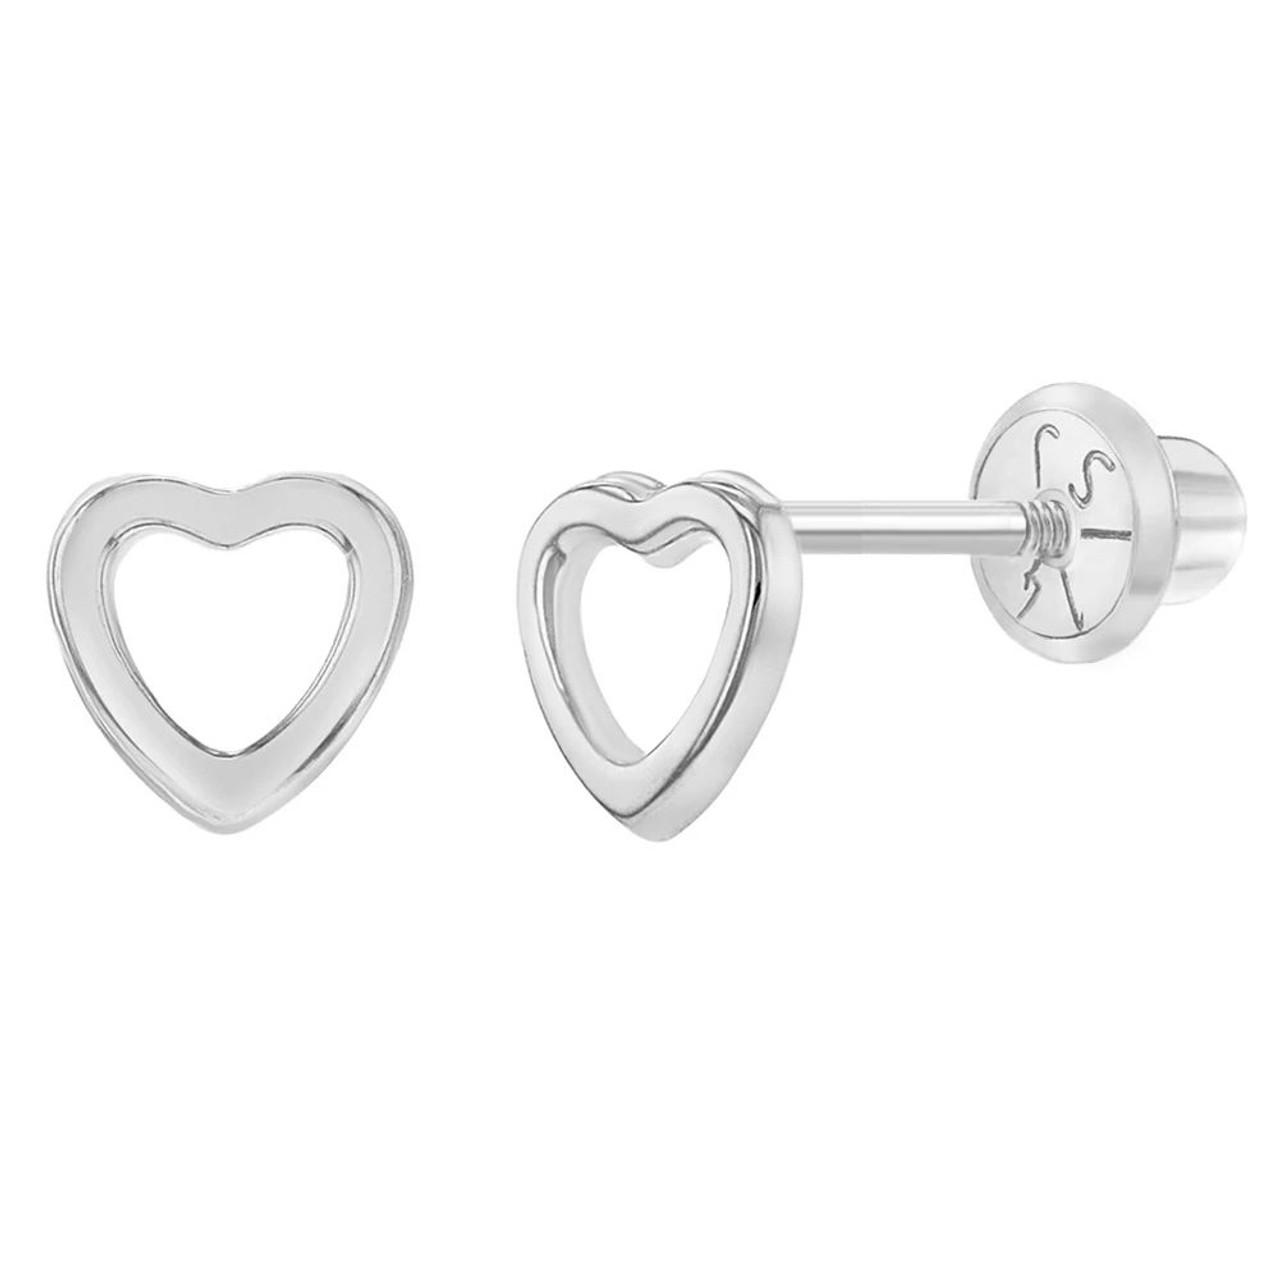 Sterling Silver Open Heart Earrings for Girls With Screw Backs, Toddler  Stud Earrings, Baby's First Earrings, Hypo-allergenic, Nickel Free 